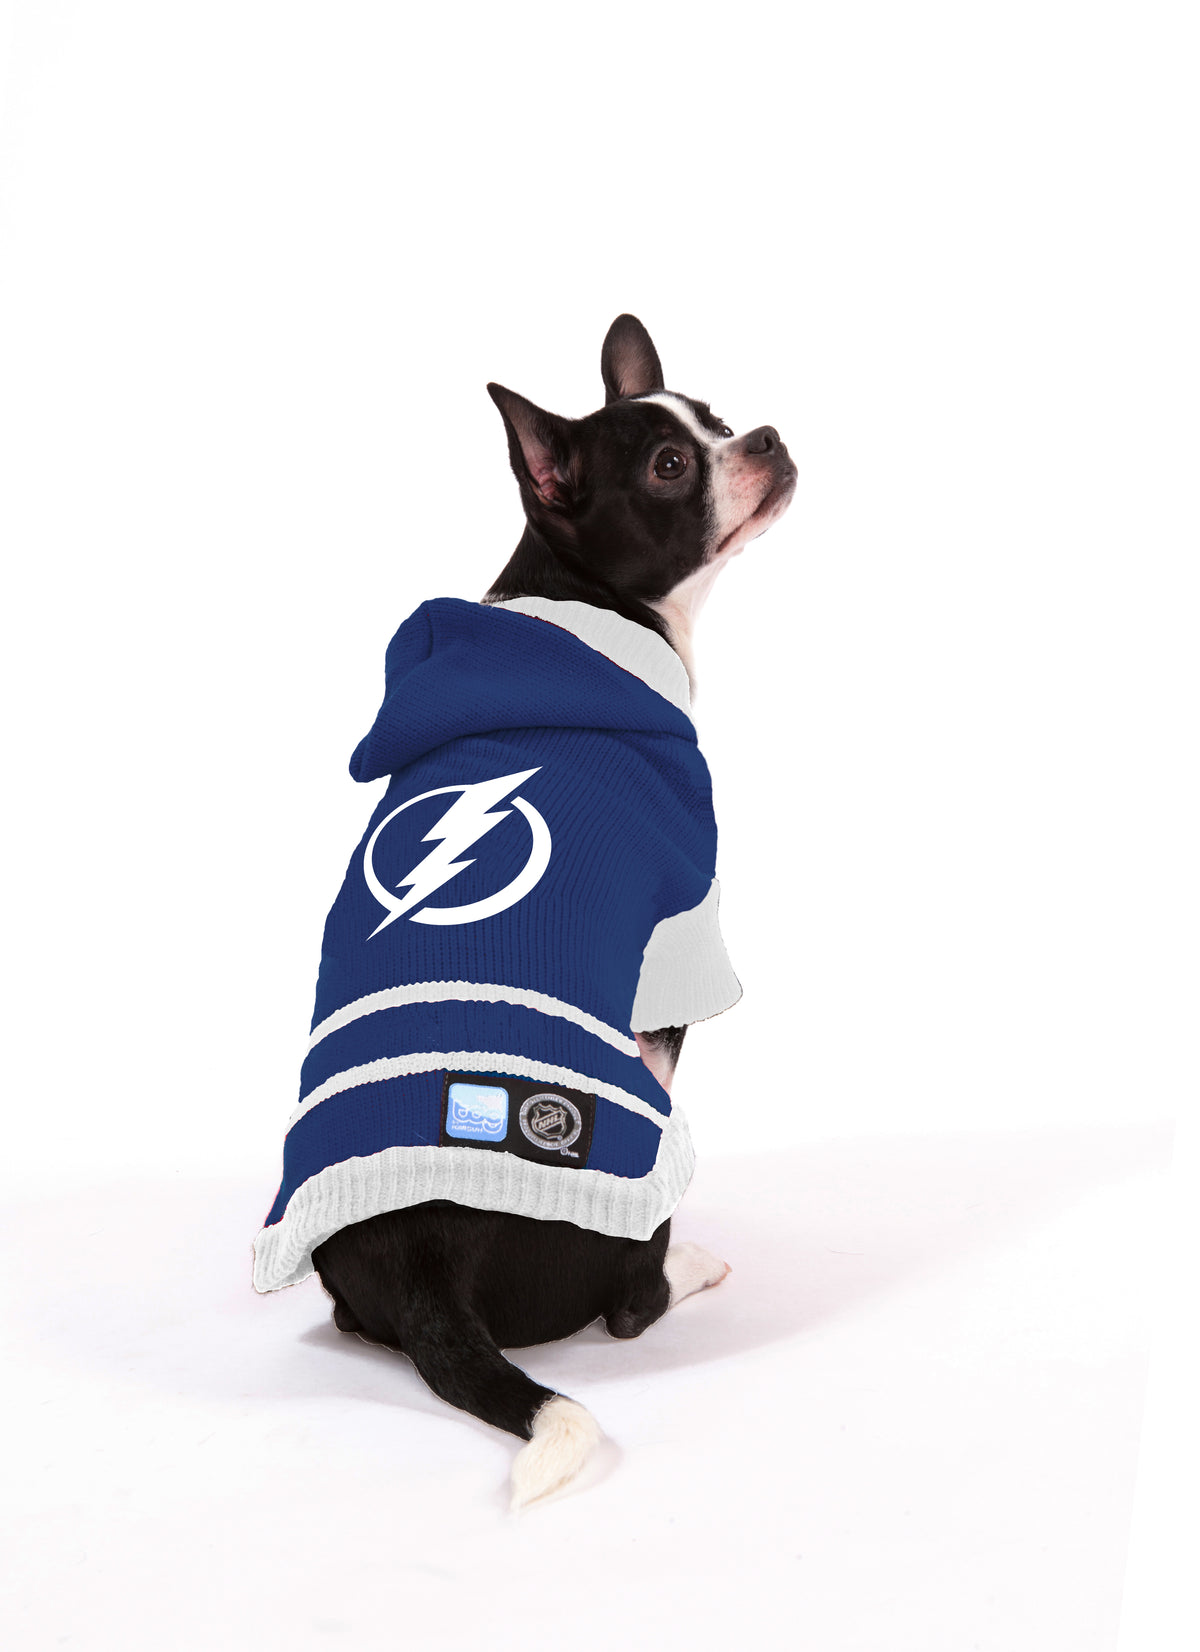 lightning dog jersey